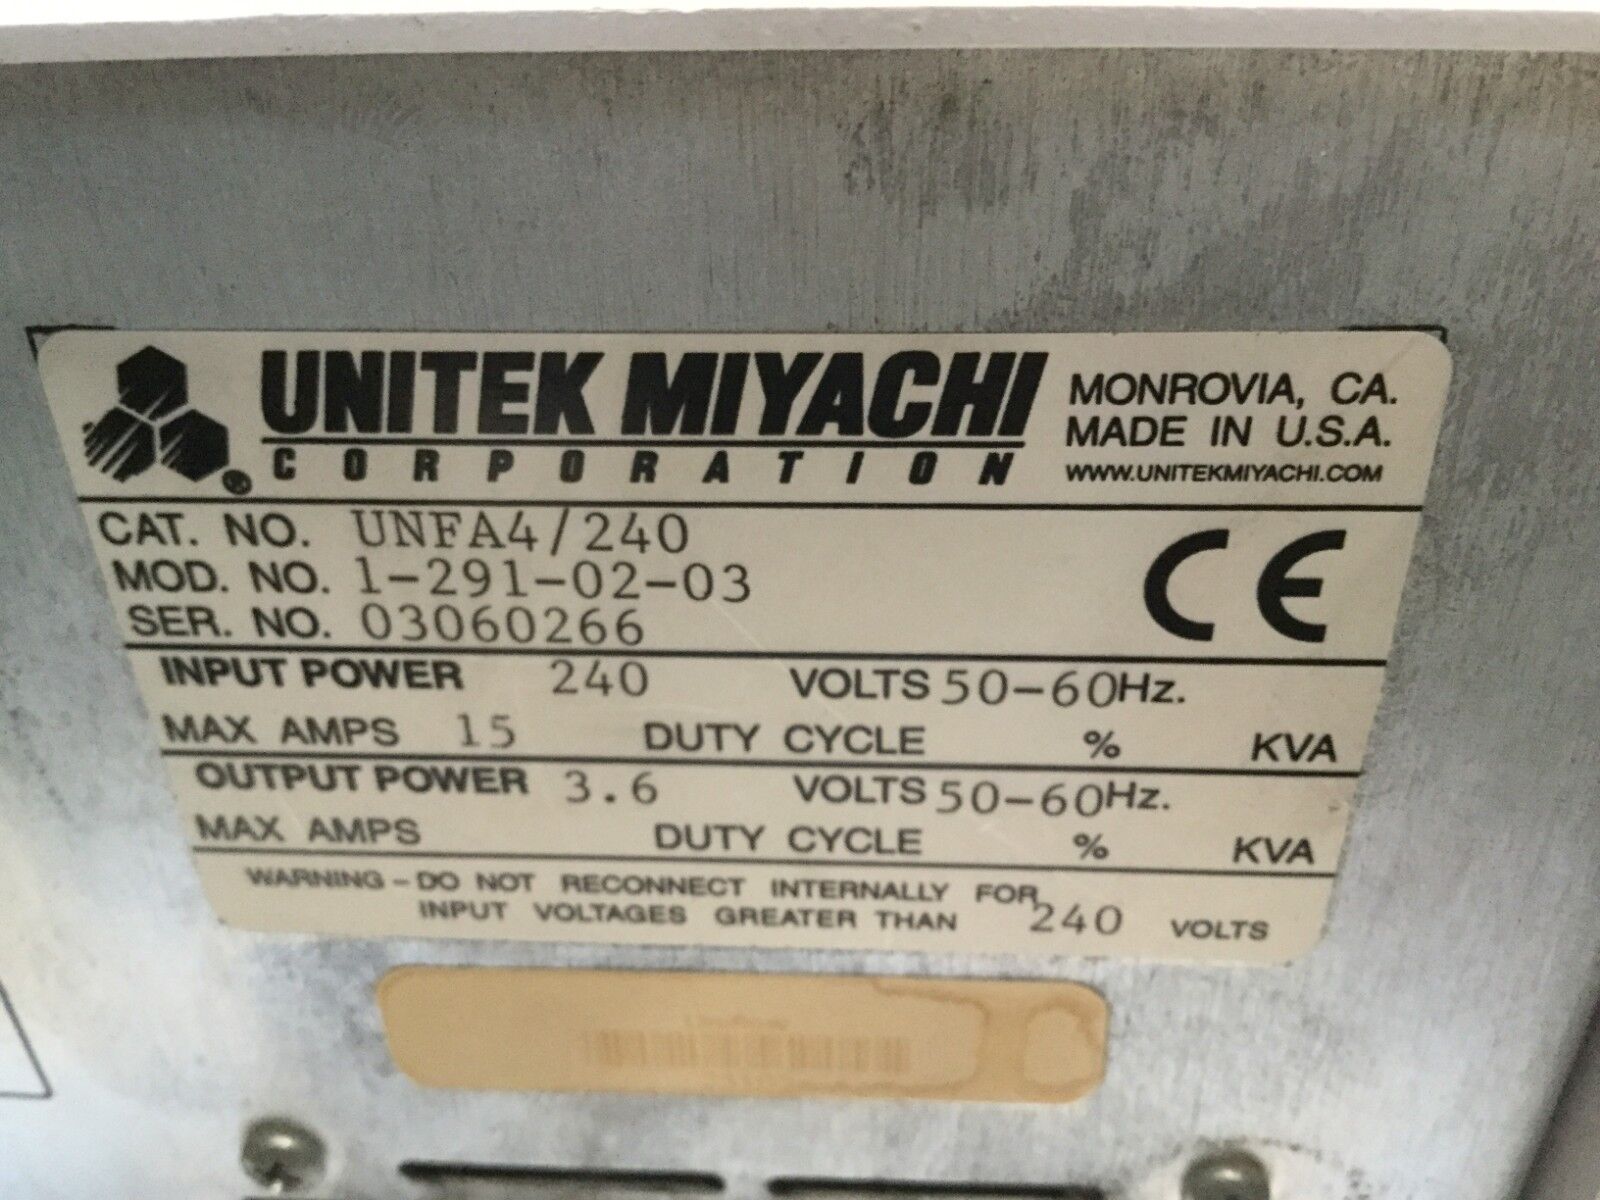 Unitek Miyachi 1-291-02-03 Pulsed Thermode Control Soldering Module UNFA4/240